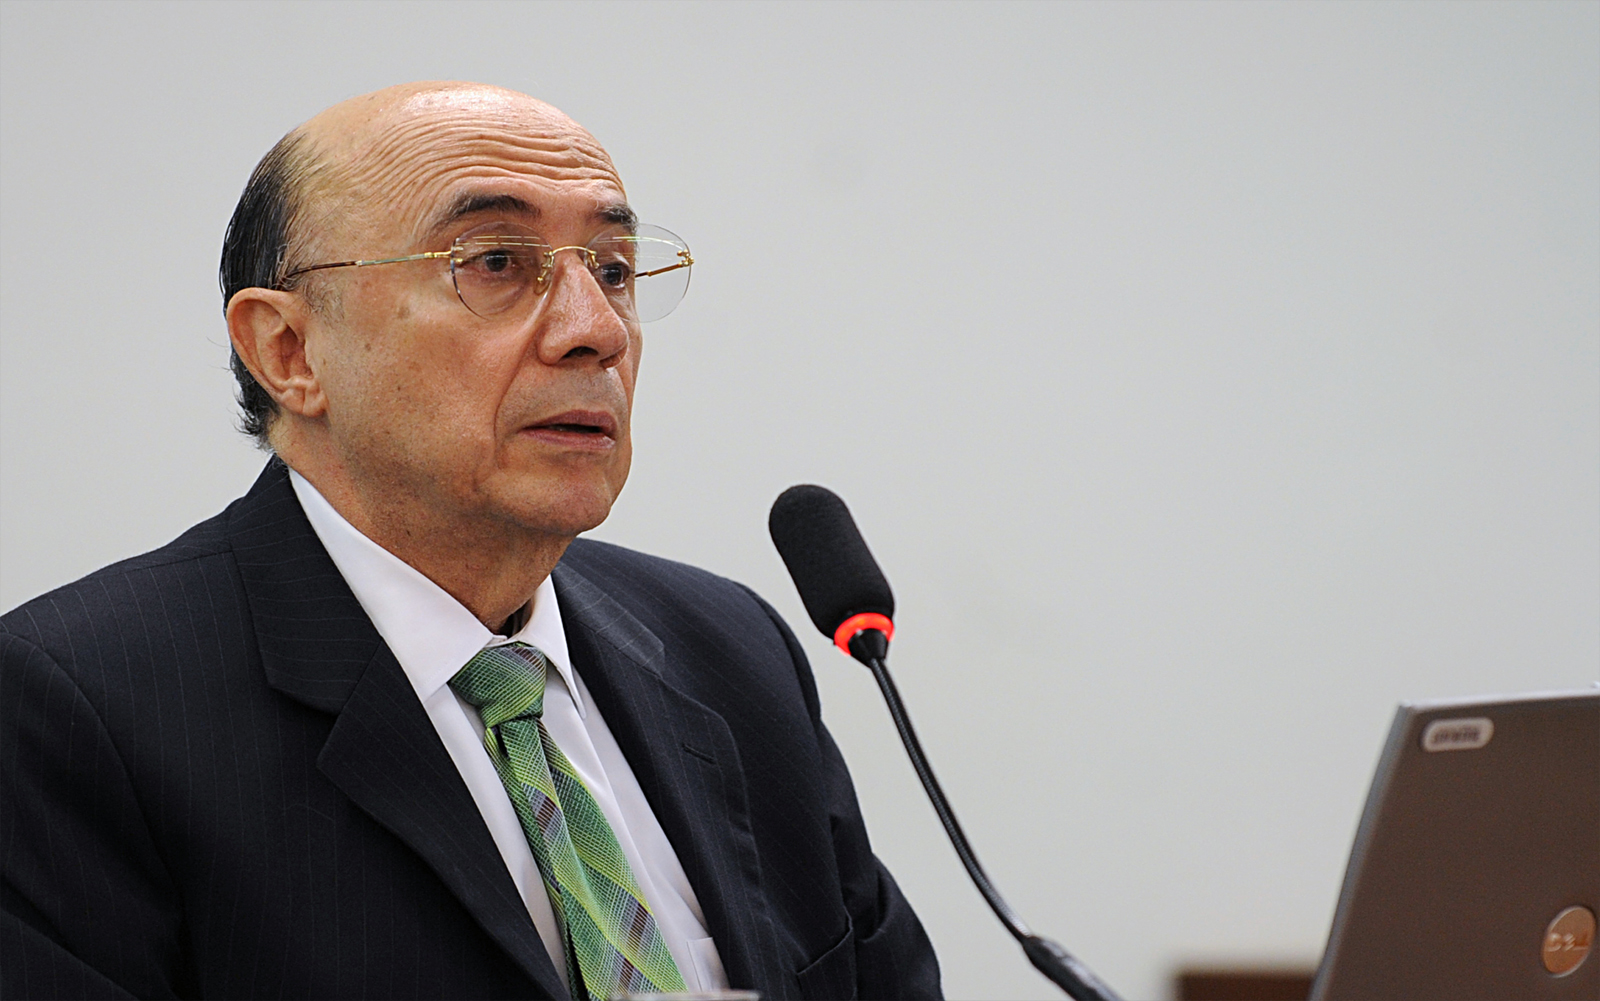 Crise pode atrasar reforma da Previdência, diz Meirelles a investidores